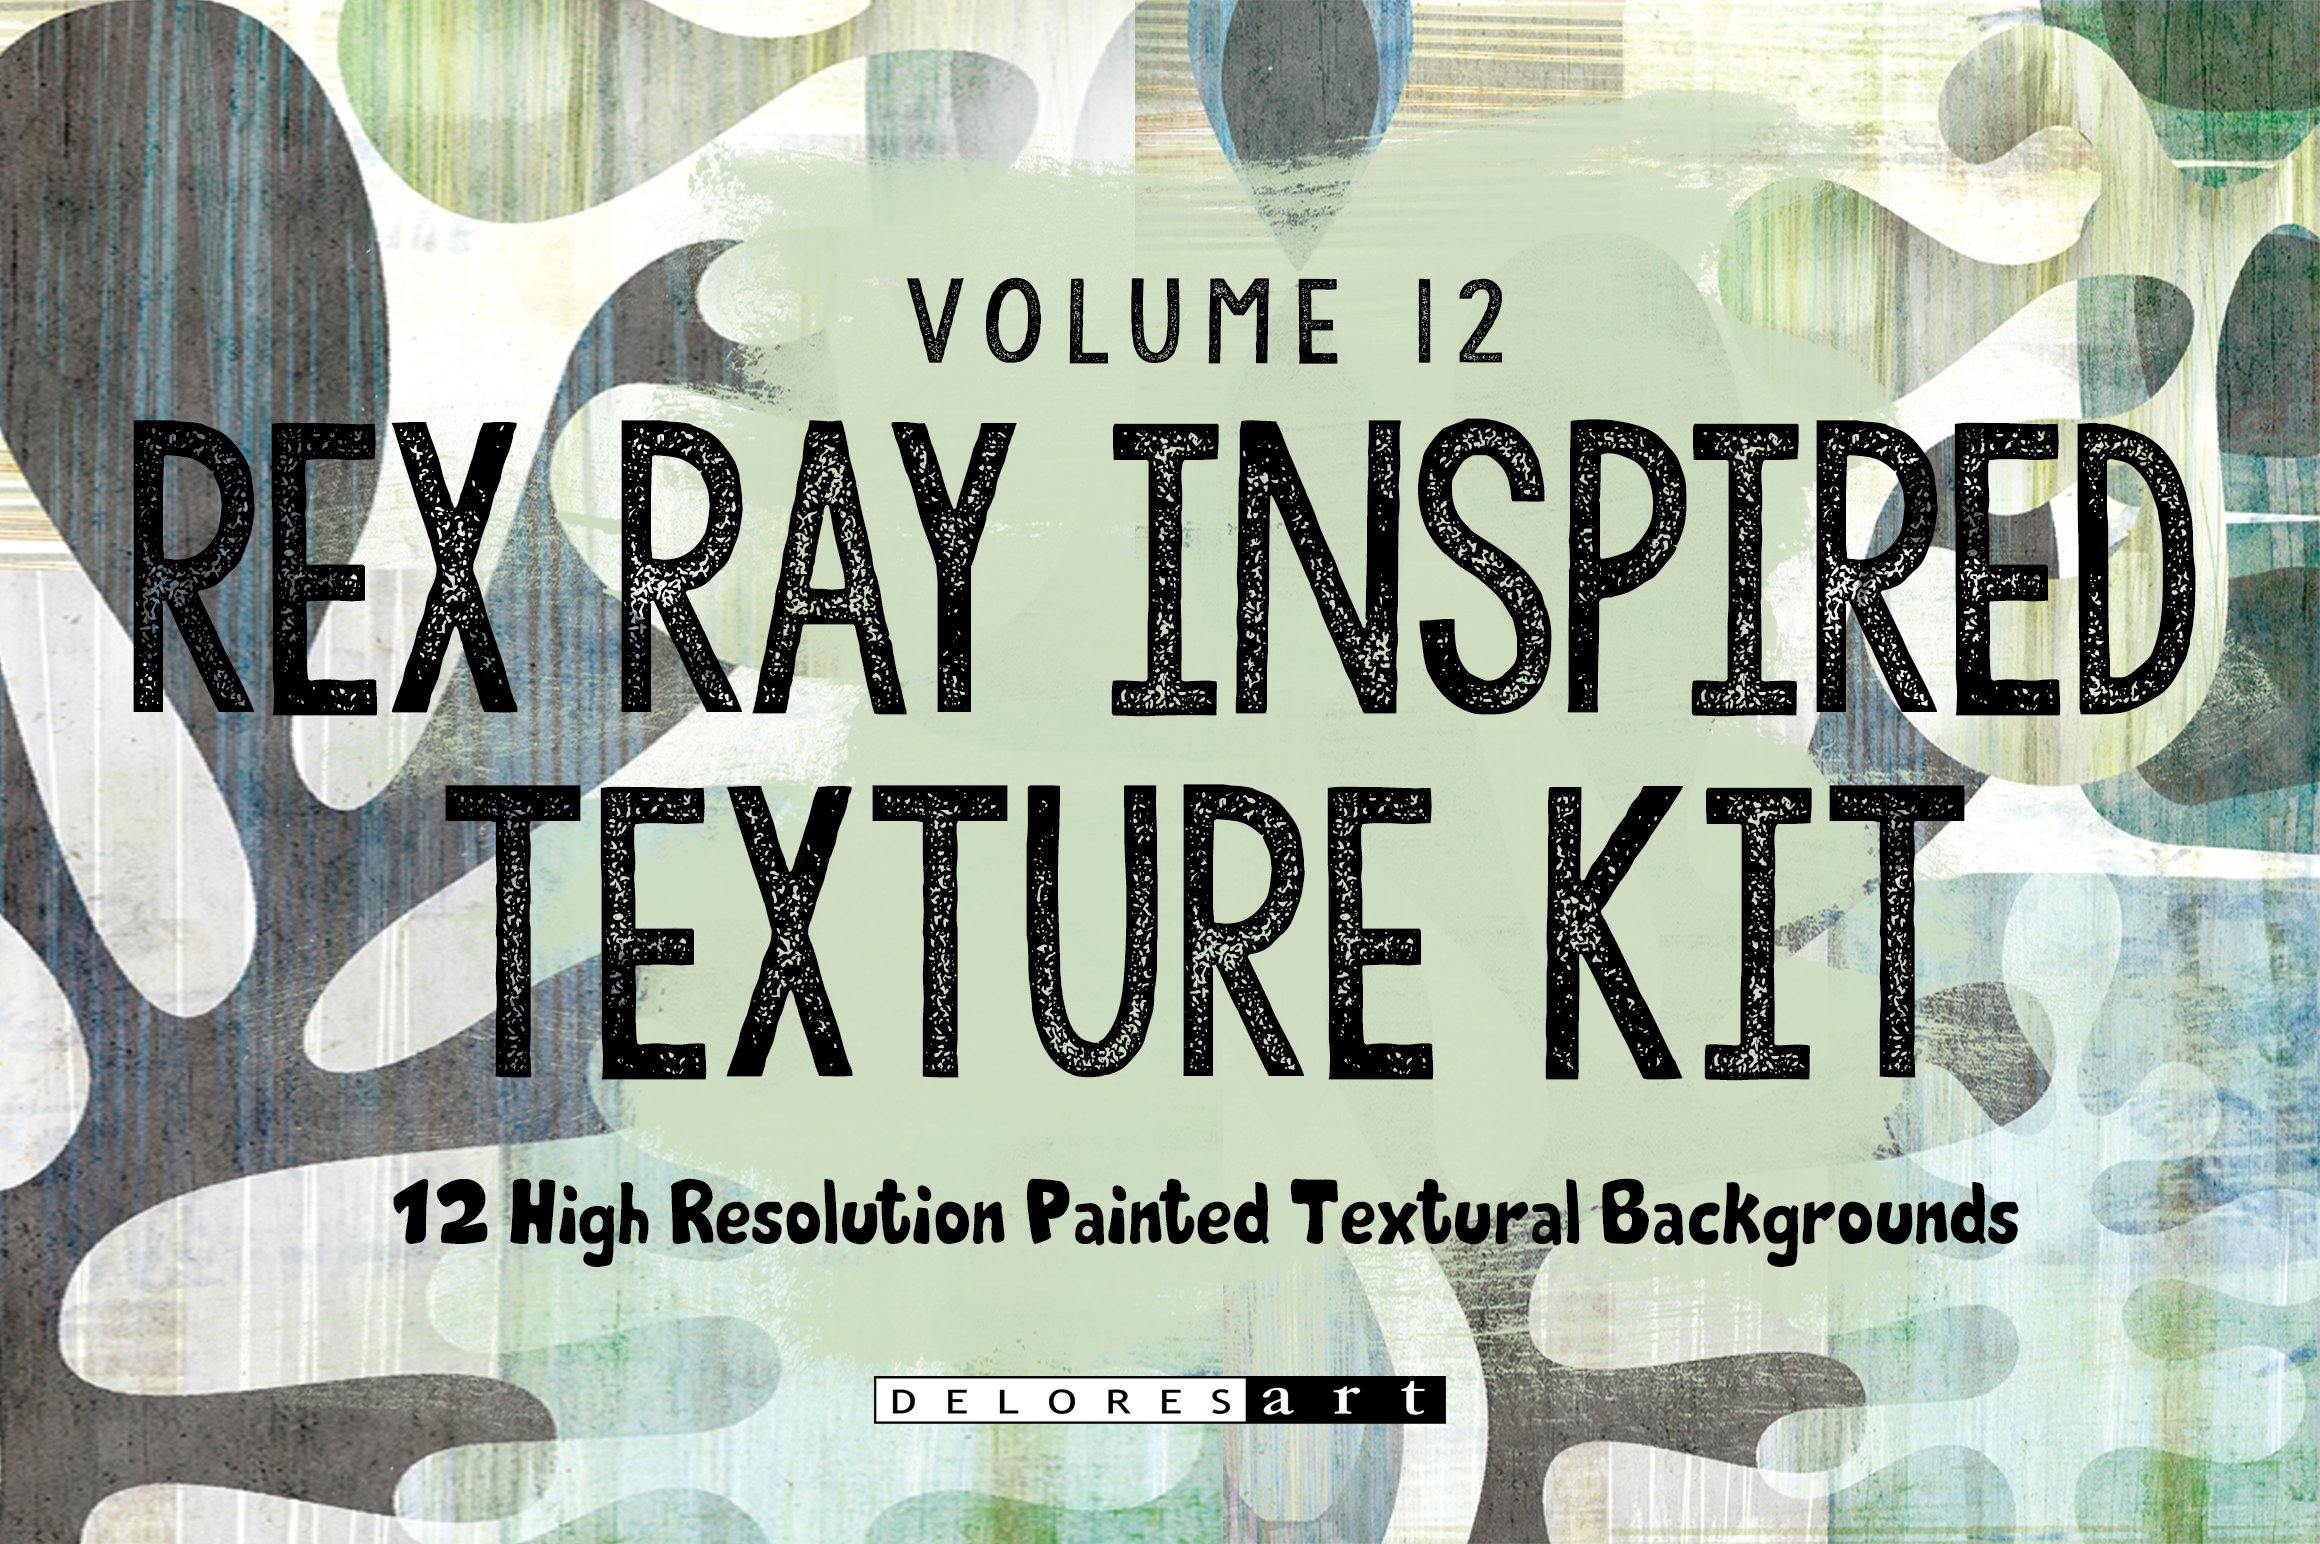 Volume 12 - Rex Ray Textures - deloresartcanada